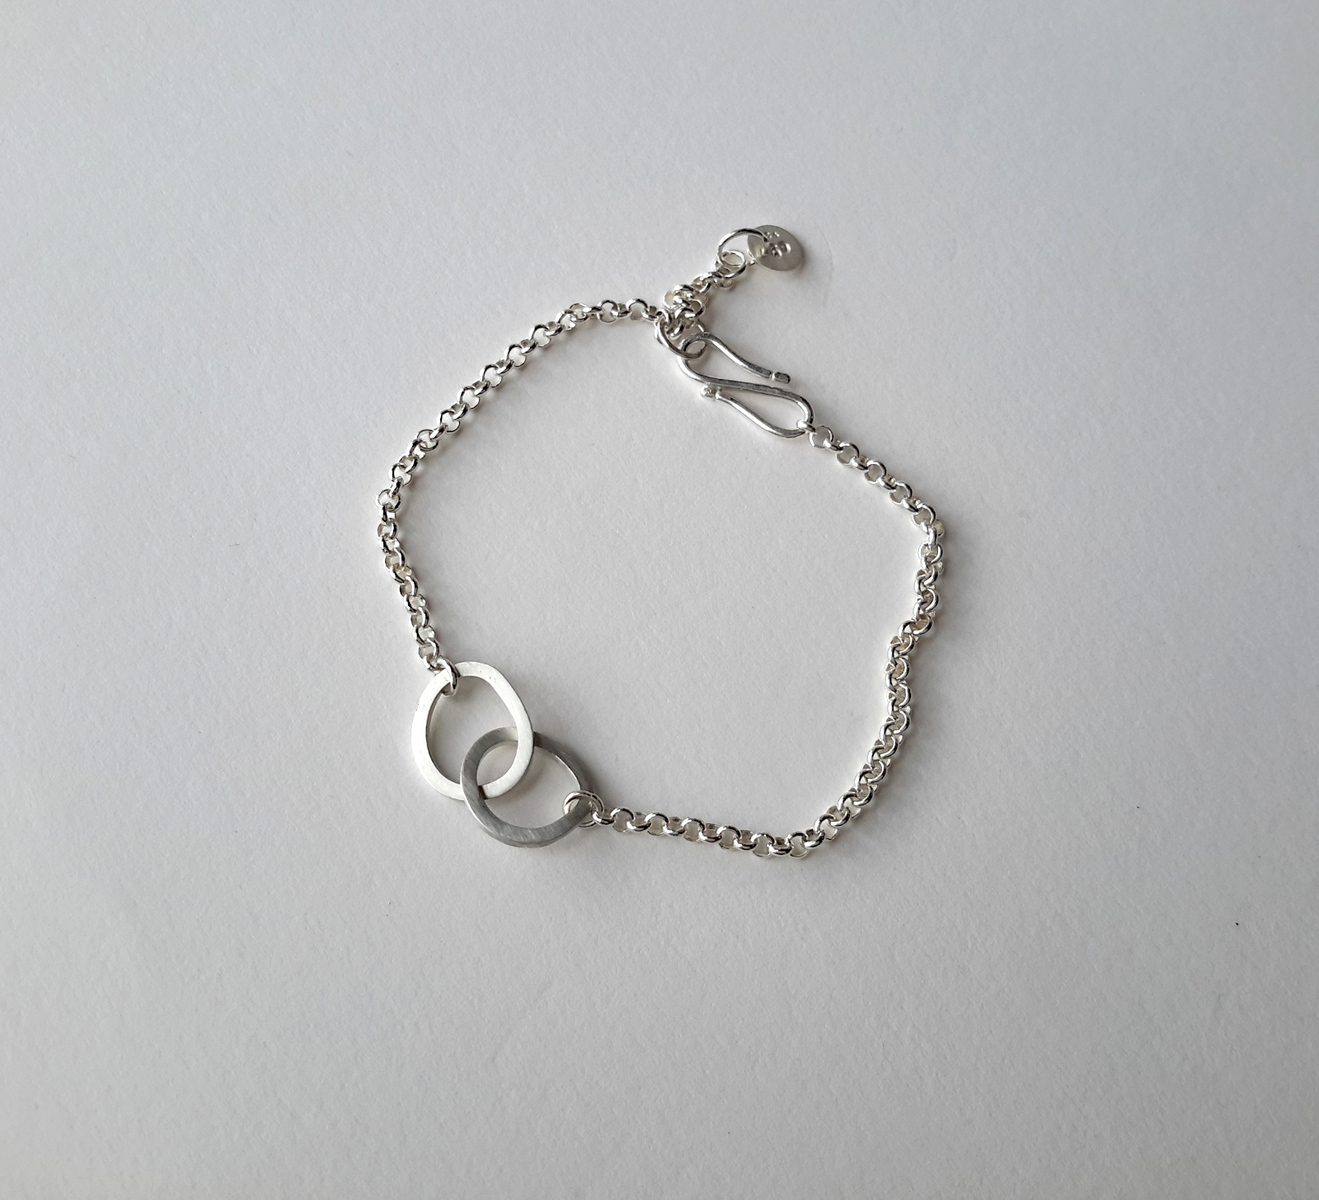 Infinity Chain bracelet 18.5cm long